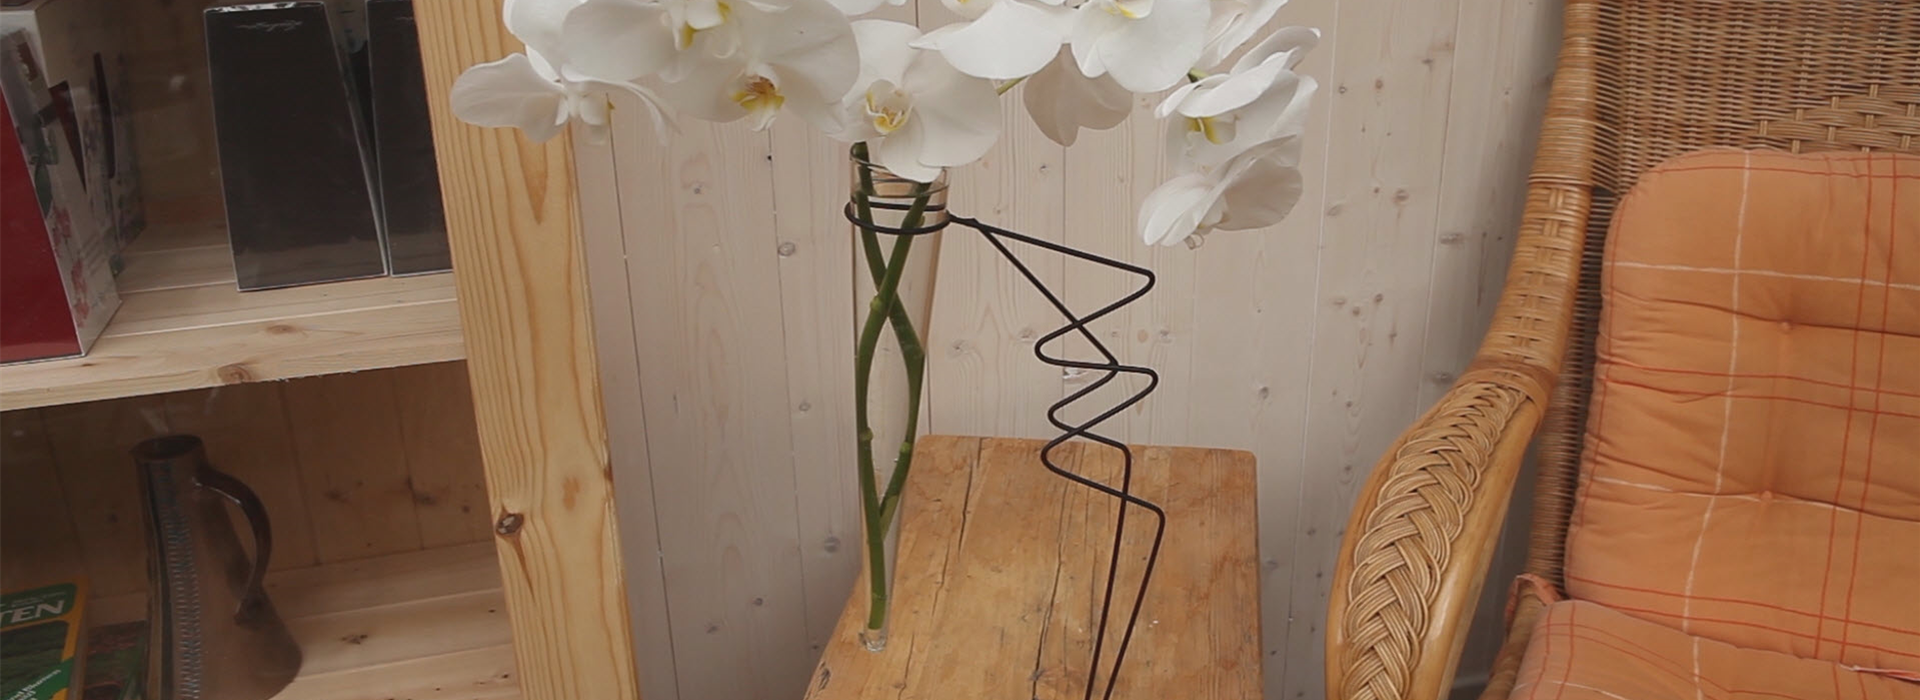 Orchidee - Anschneiden für den Heimgebrauch (thumbnail)